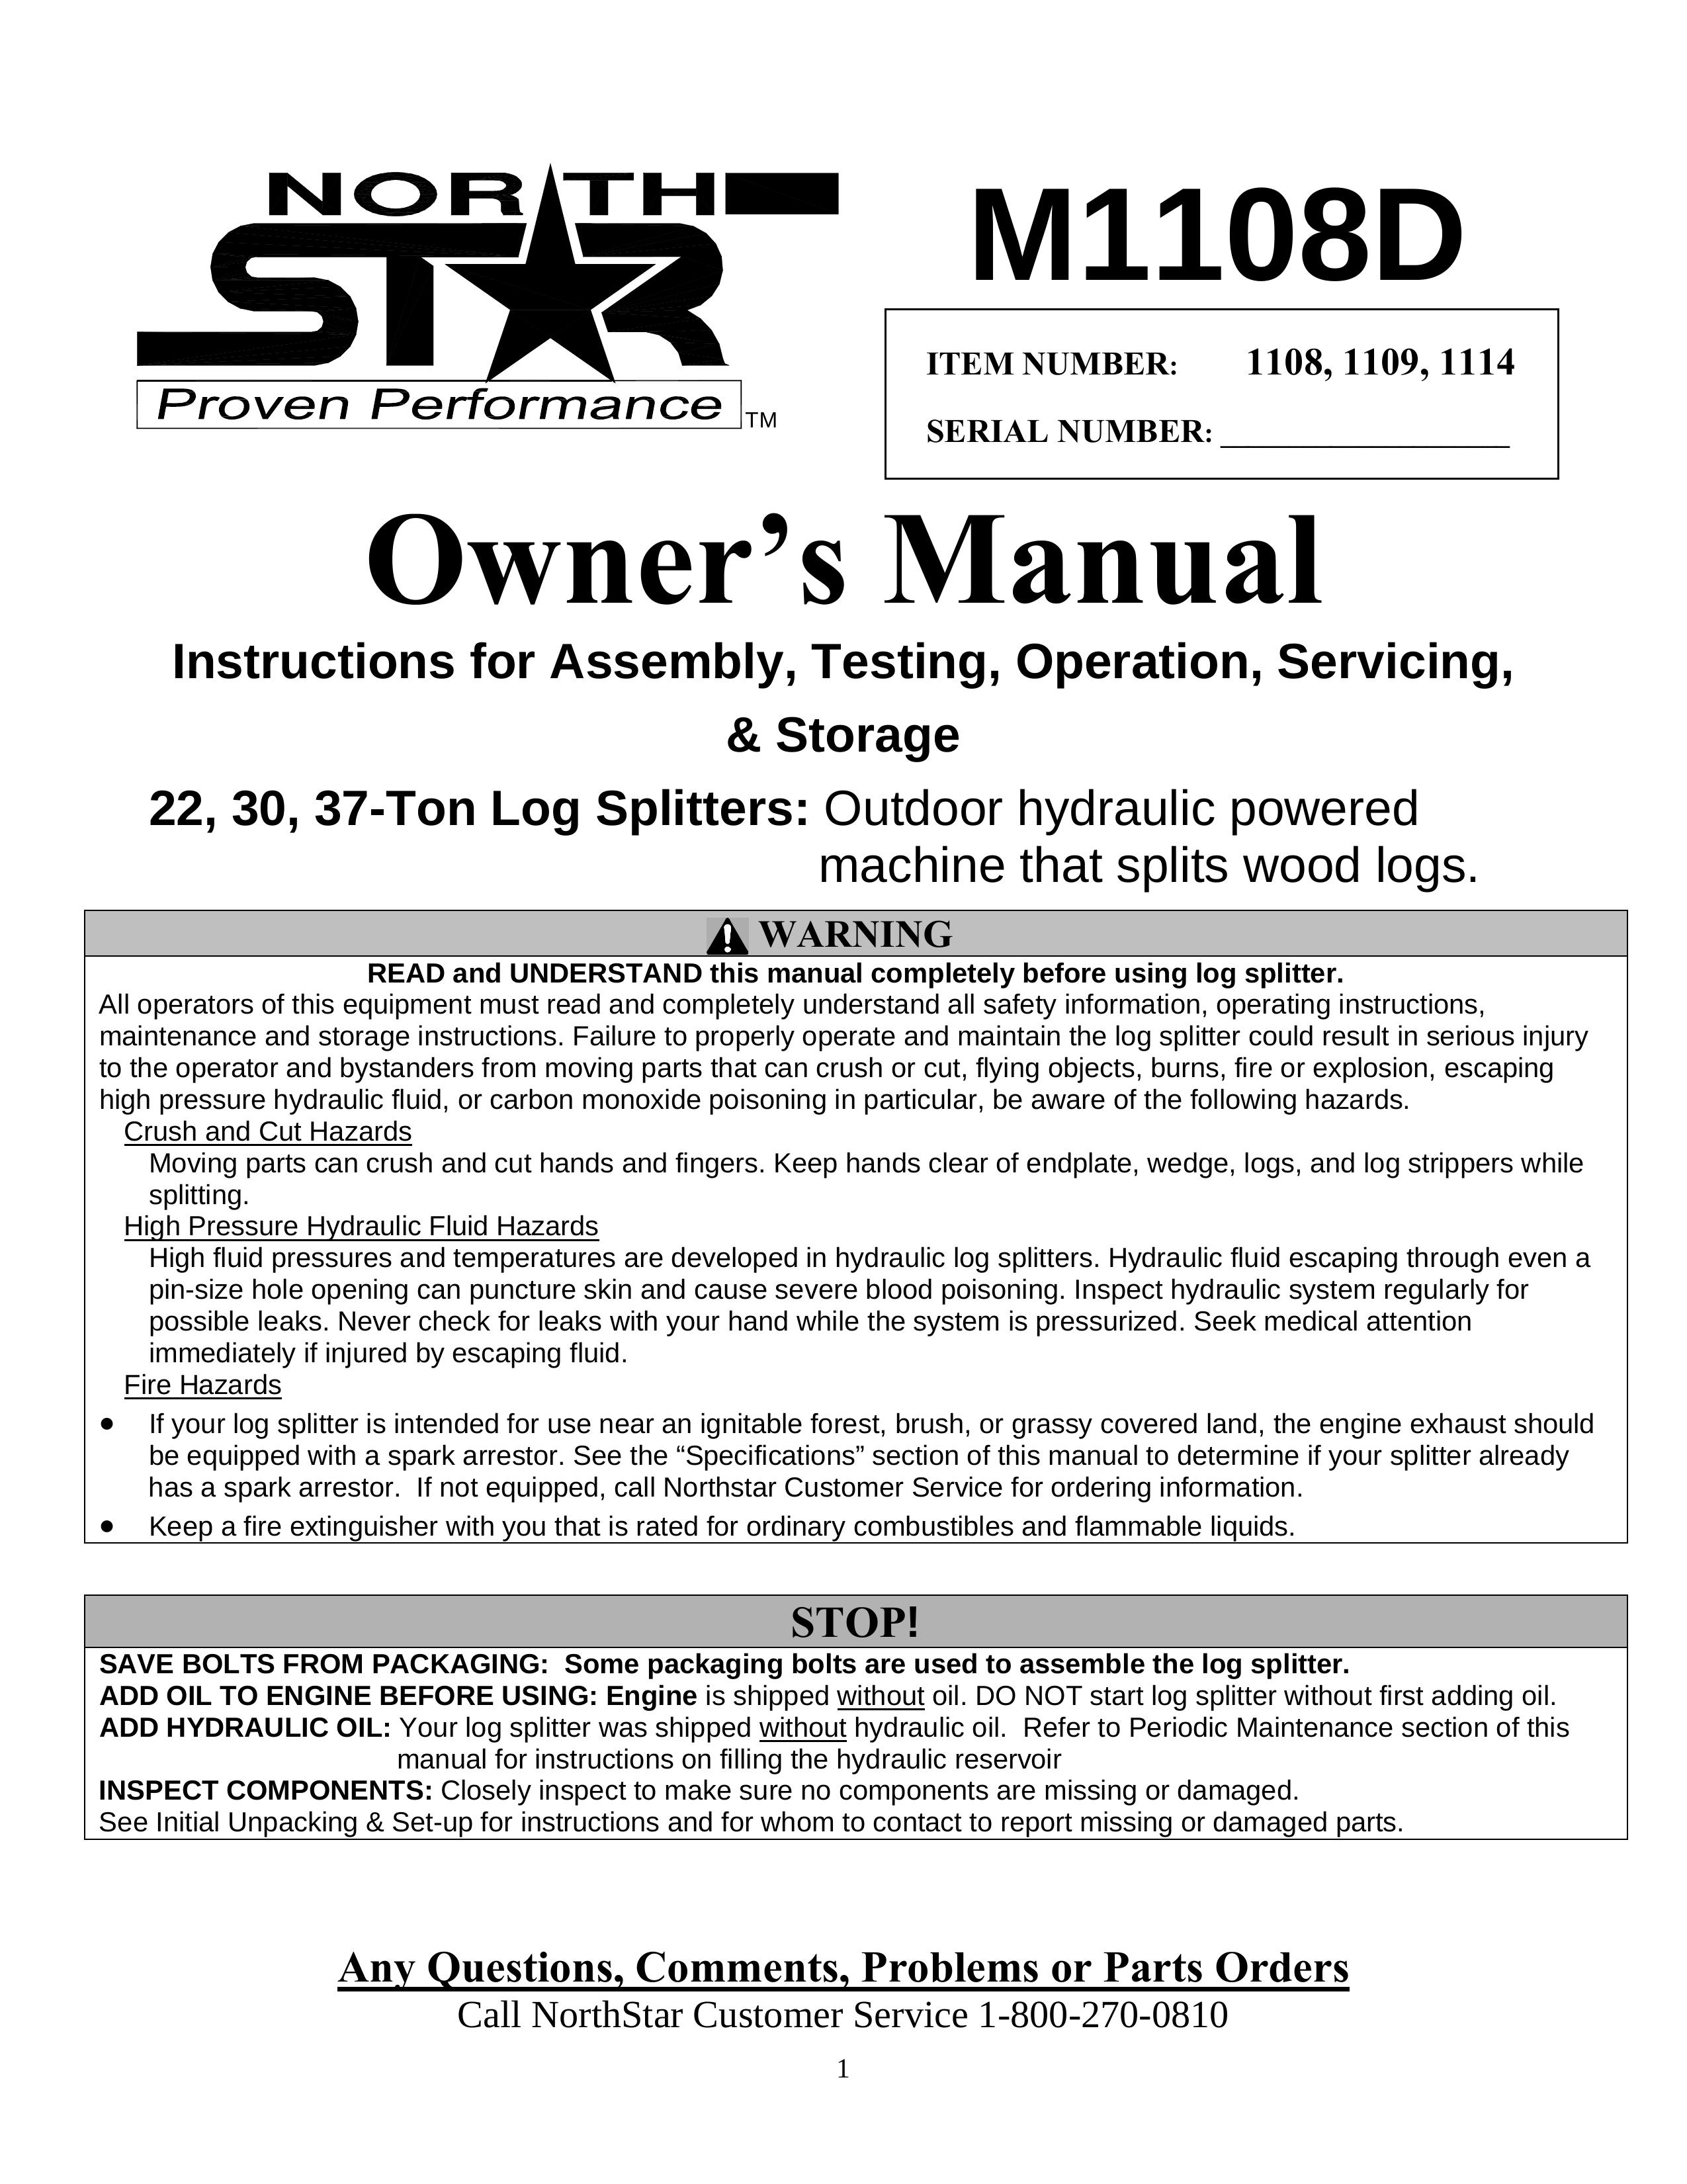 North Star M1108D Log Splitter User Manual